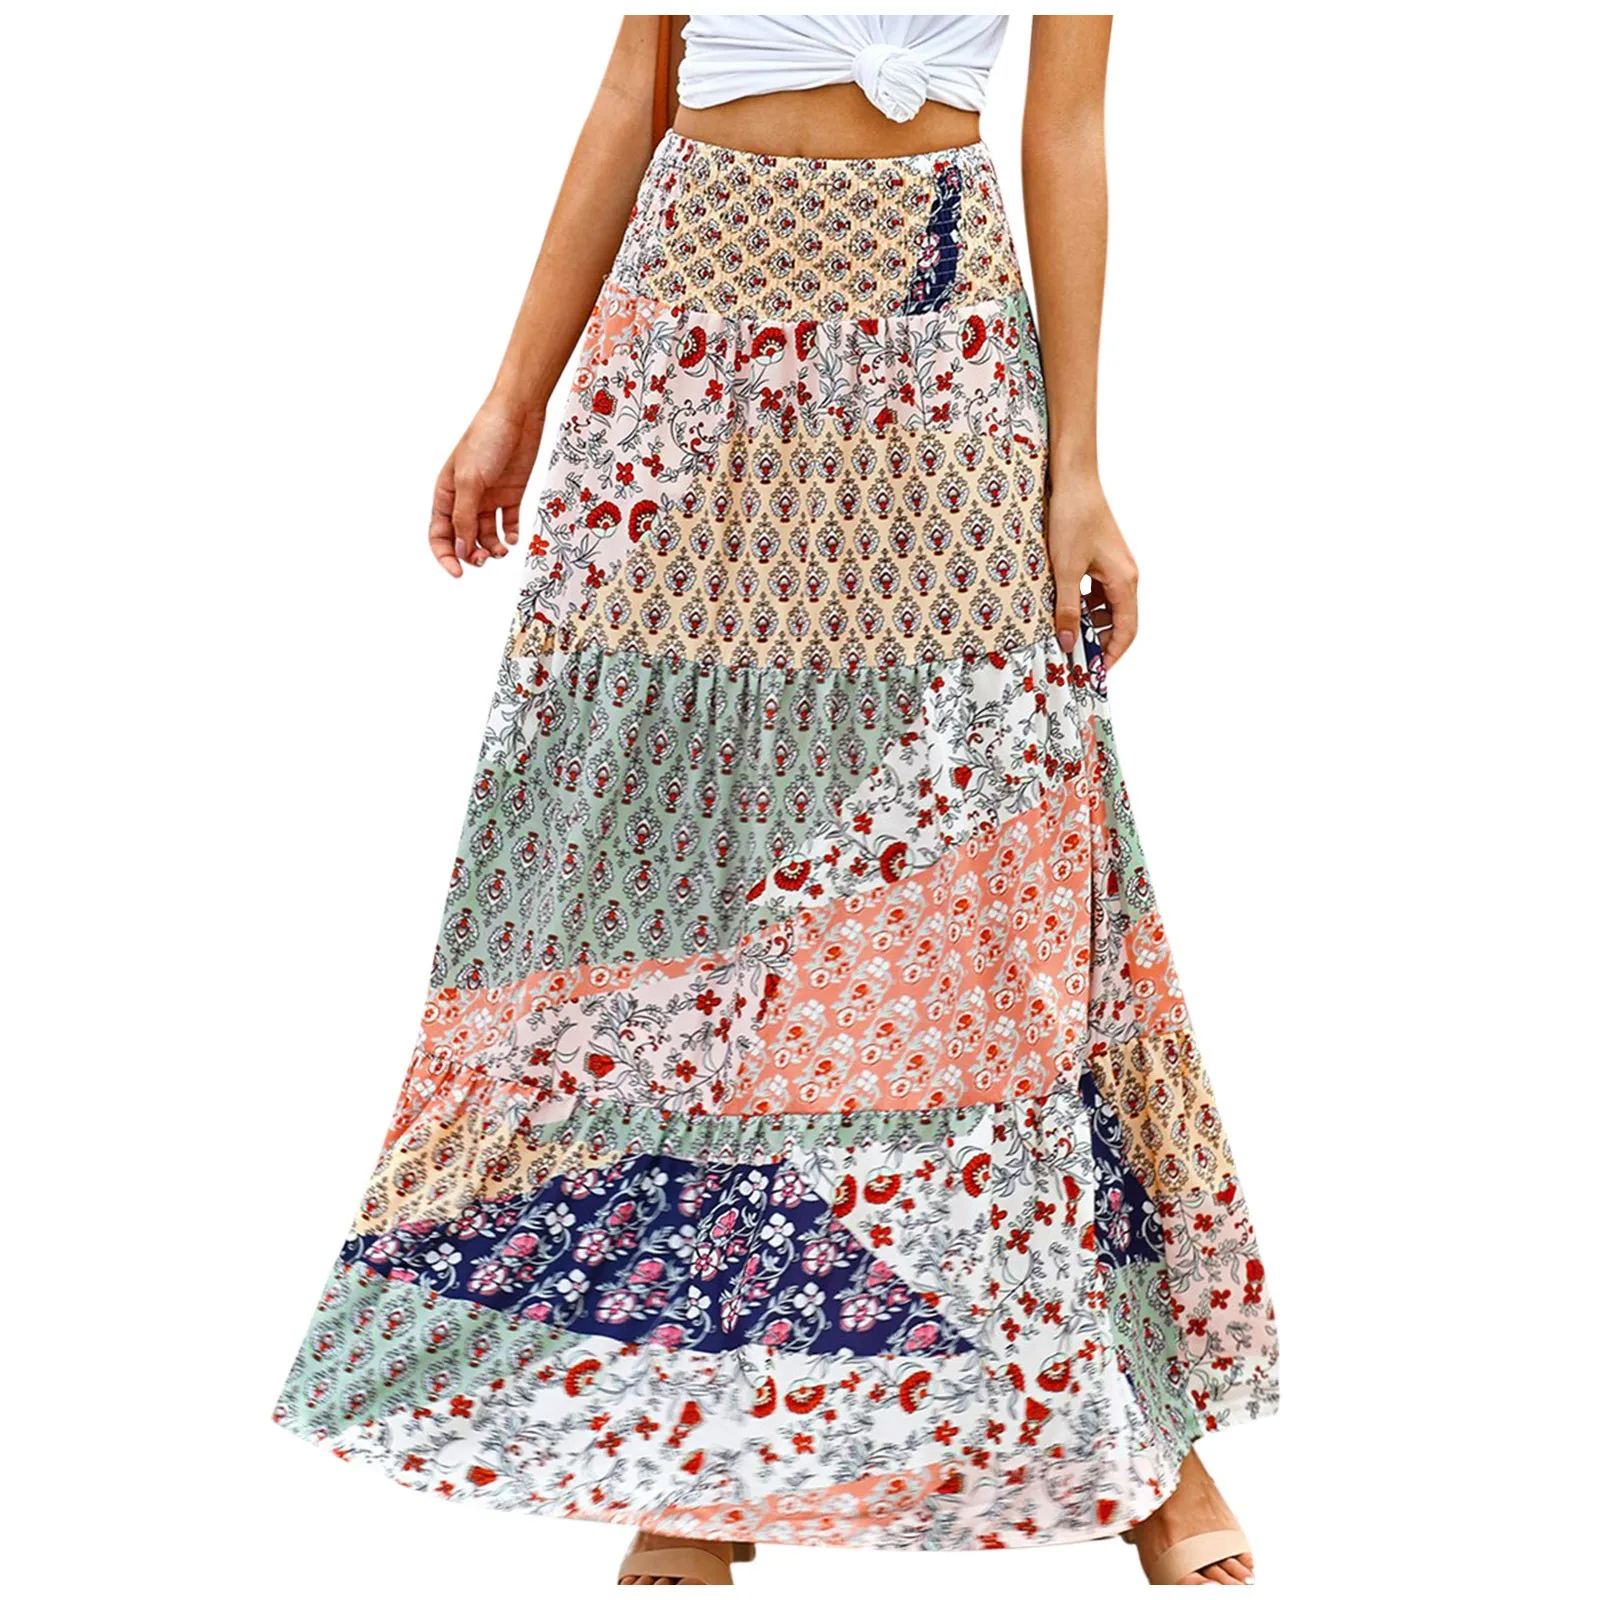 

Women's Print Half Skirt Ethnic Style High Waisted A-line Skirt Shorts Skirts Streetwear Spring faldas para mujeres